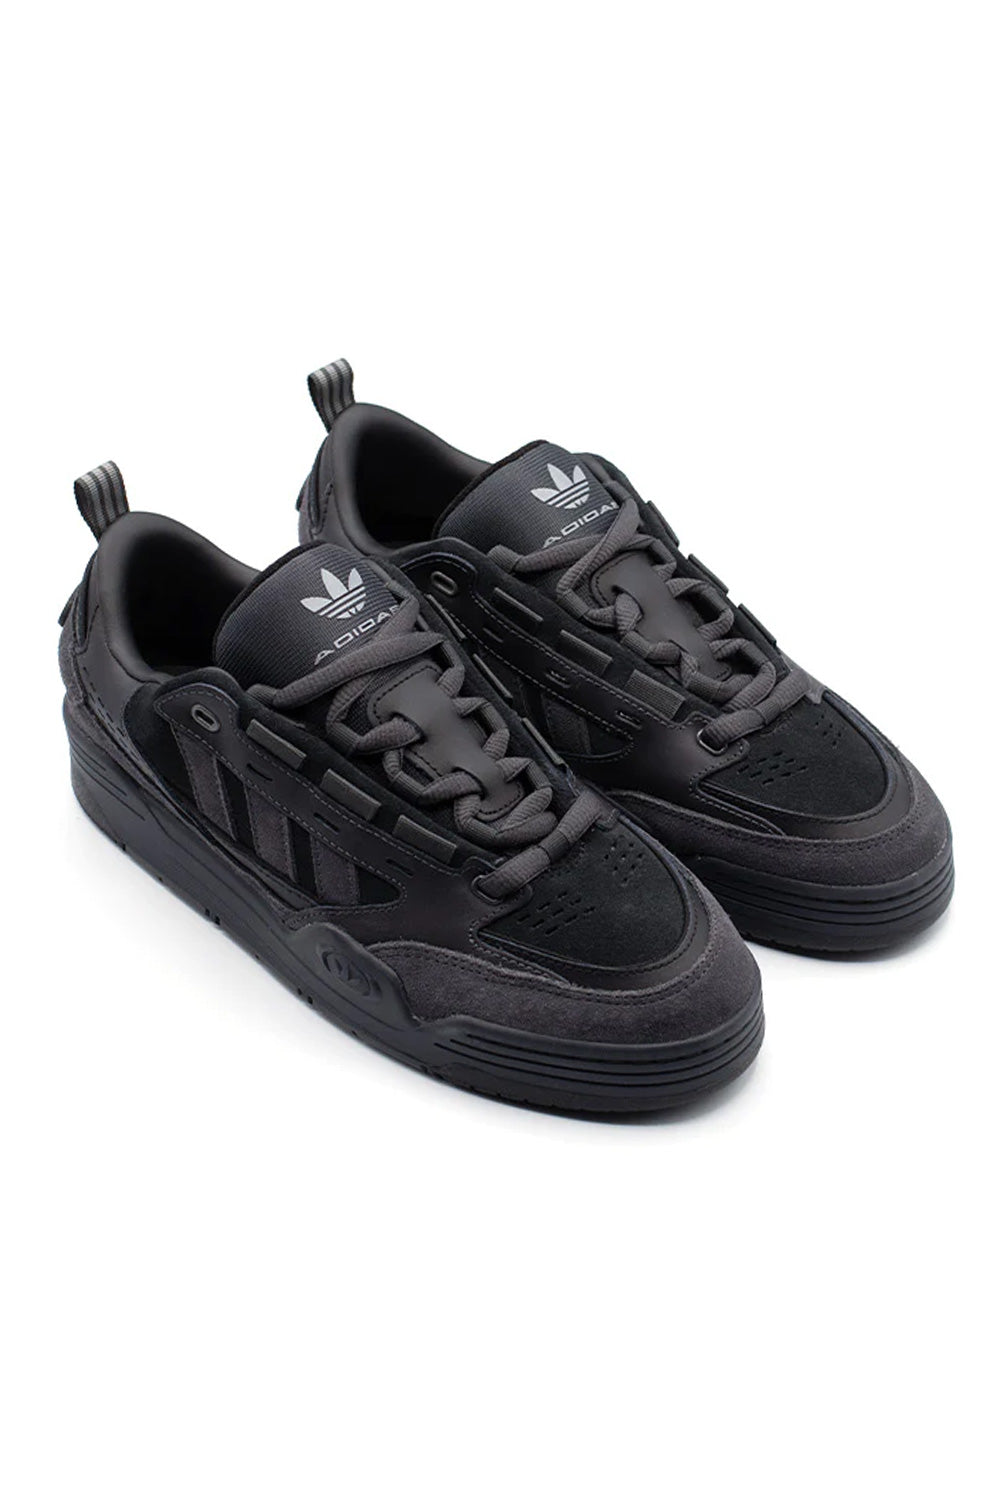 Adidas Adi2000 Shoe Core Black / Utility Black / Utility Black - BONKERS